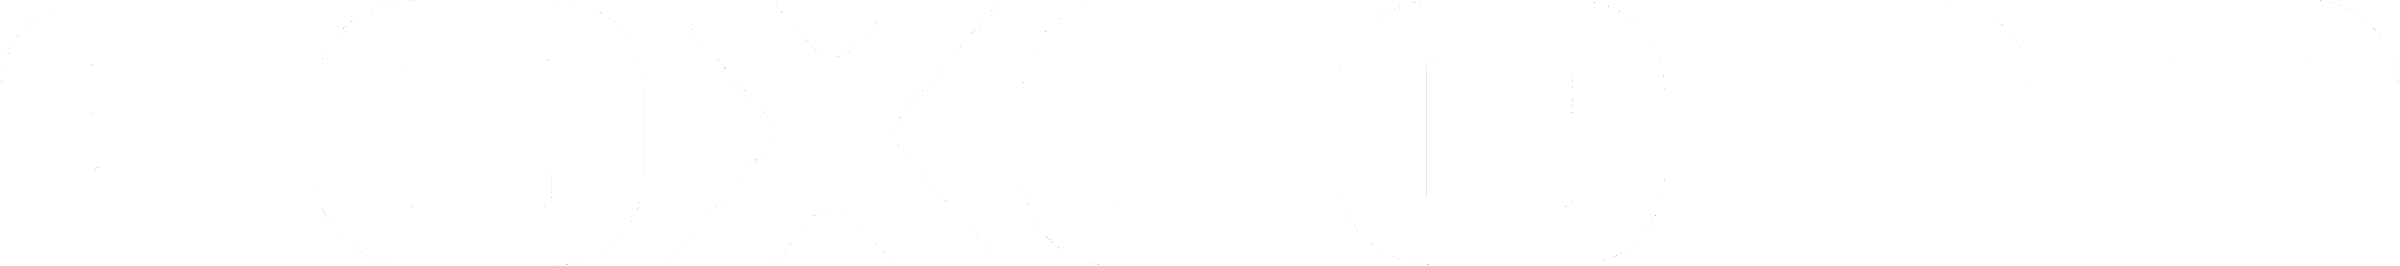 Foxconn Logo - Foxconn Logo PNG Transparent & SVG Vector